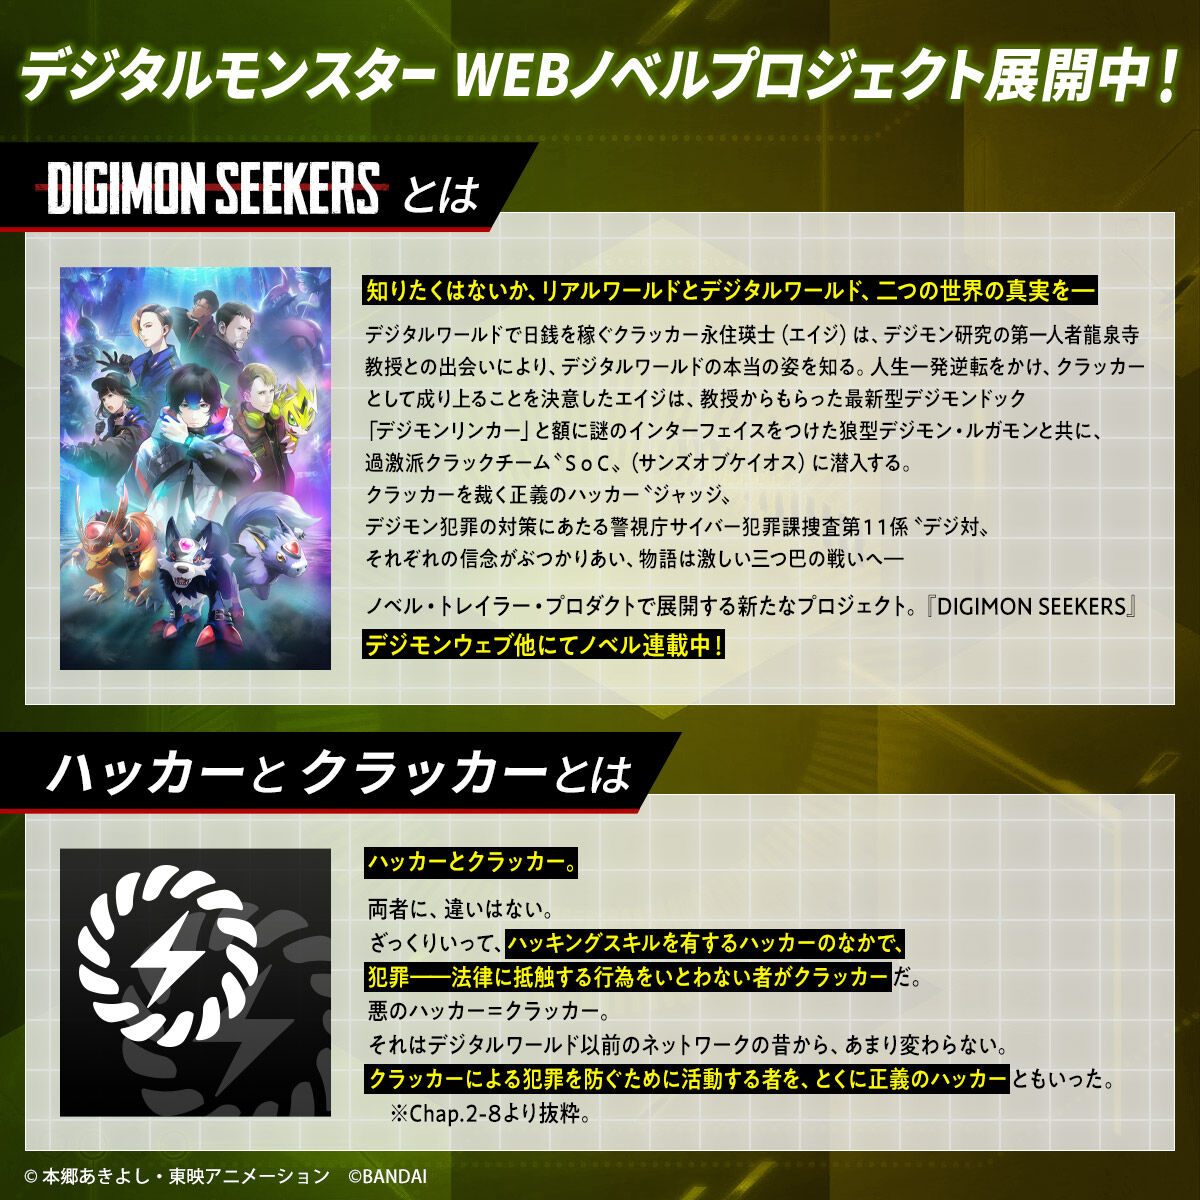 [PREORDER] BEMEMORY Digimon Seekers Pulsemon Dim